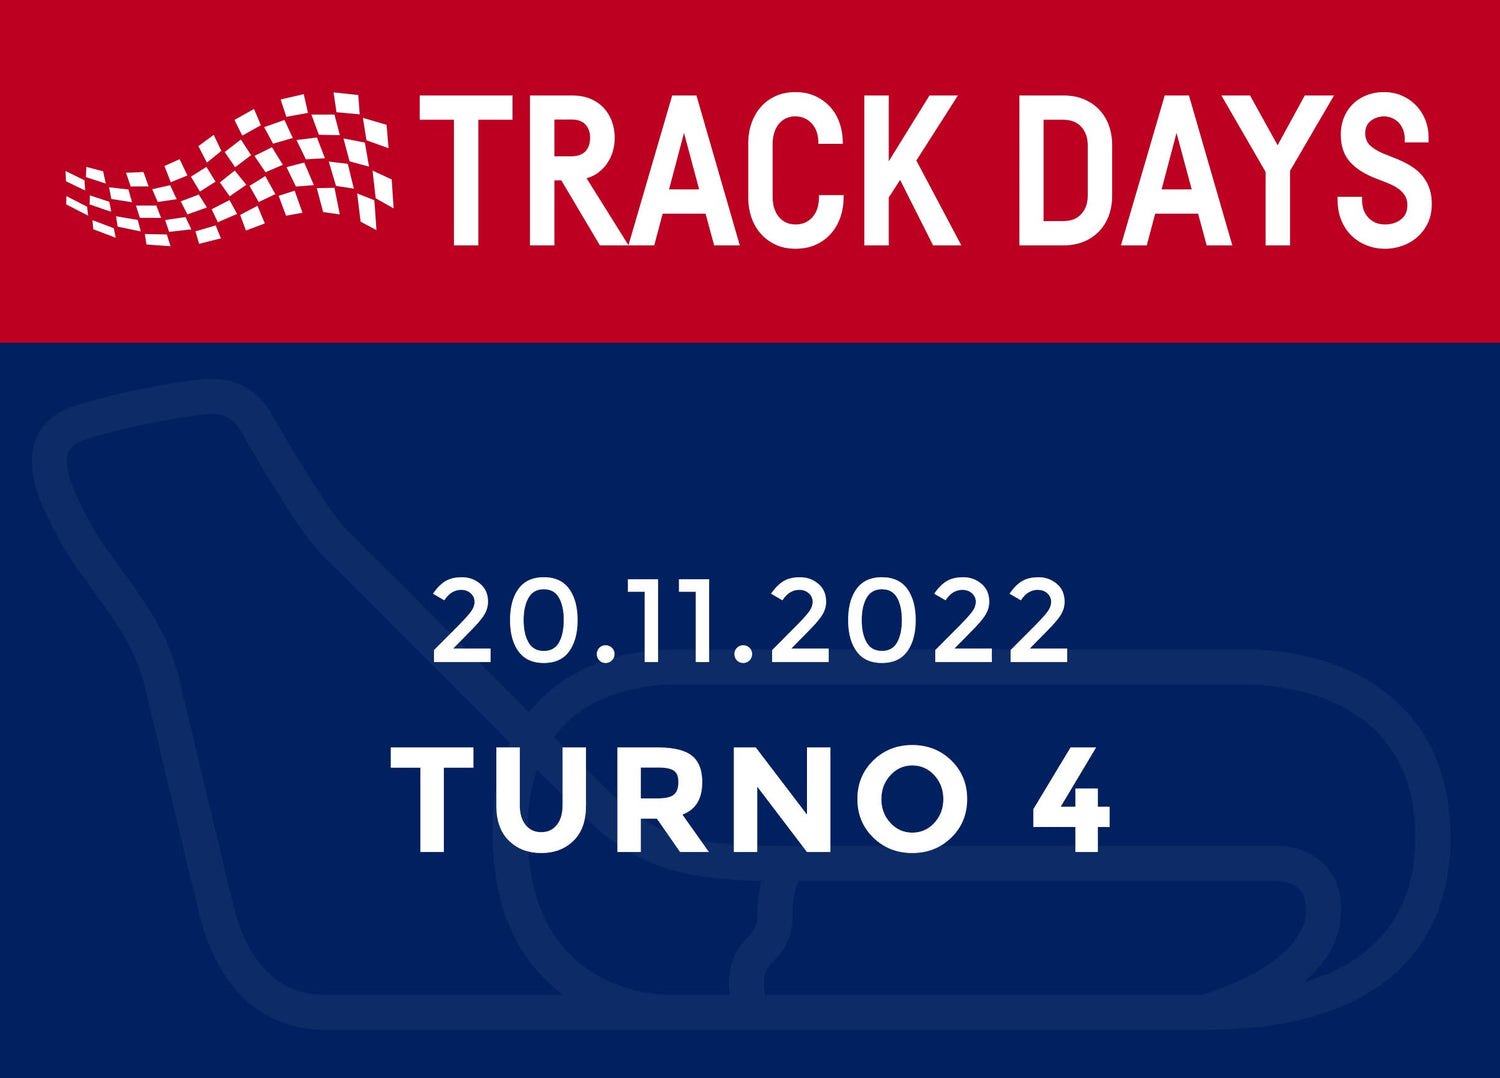 TRACK DAYS 20.11.22 TURNO 4